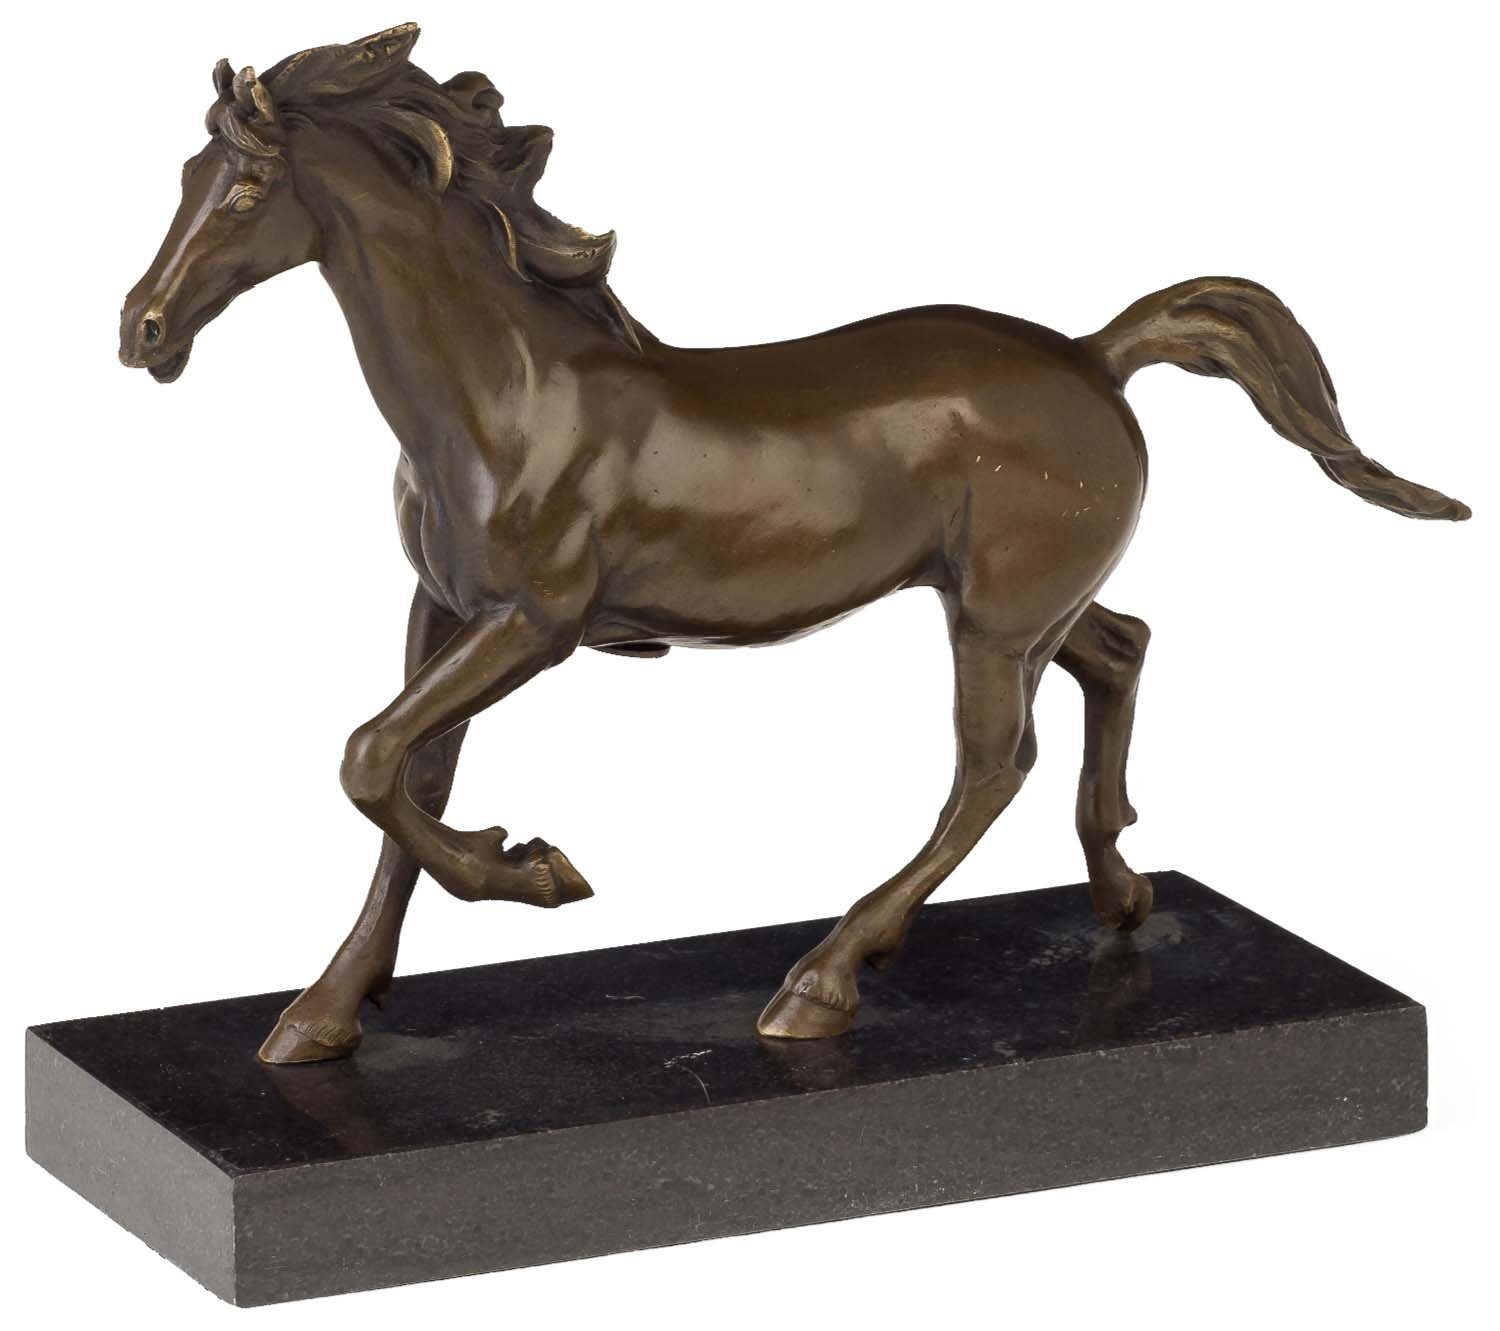 Aubaho Skulptur Bronzeskulptur im Antik-Stil Pferd Bronze Figur Skulptur Statue - 26cm